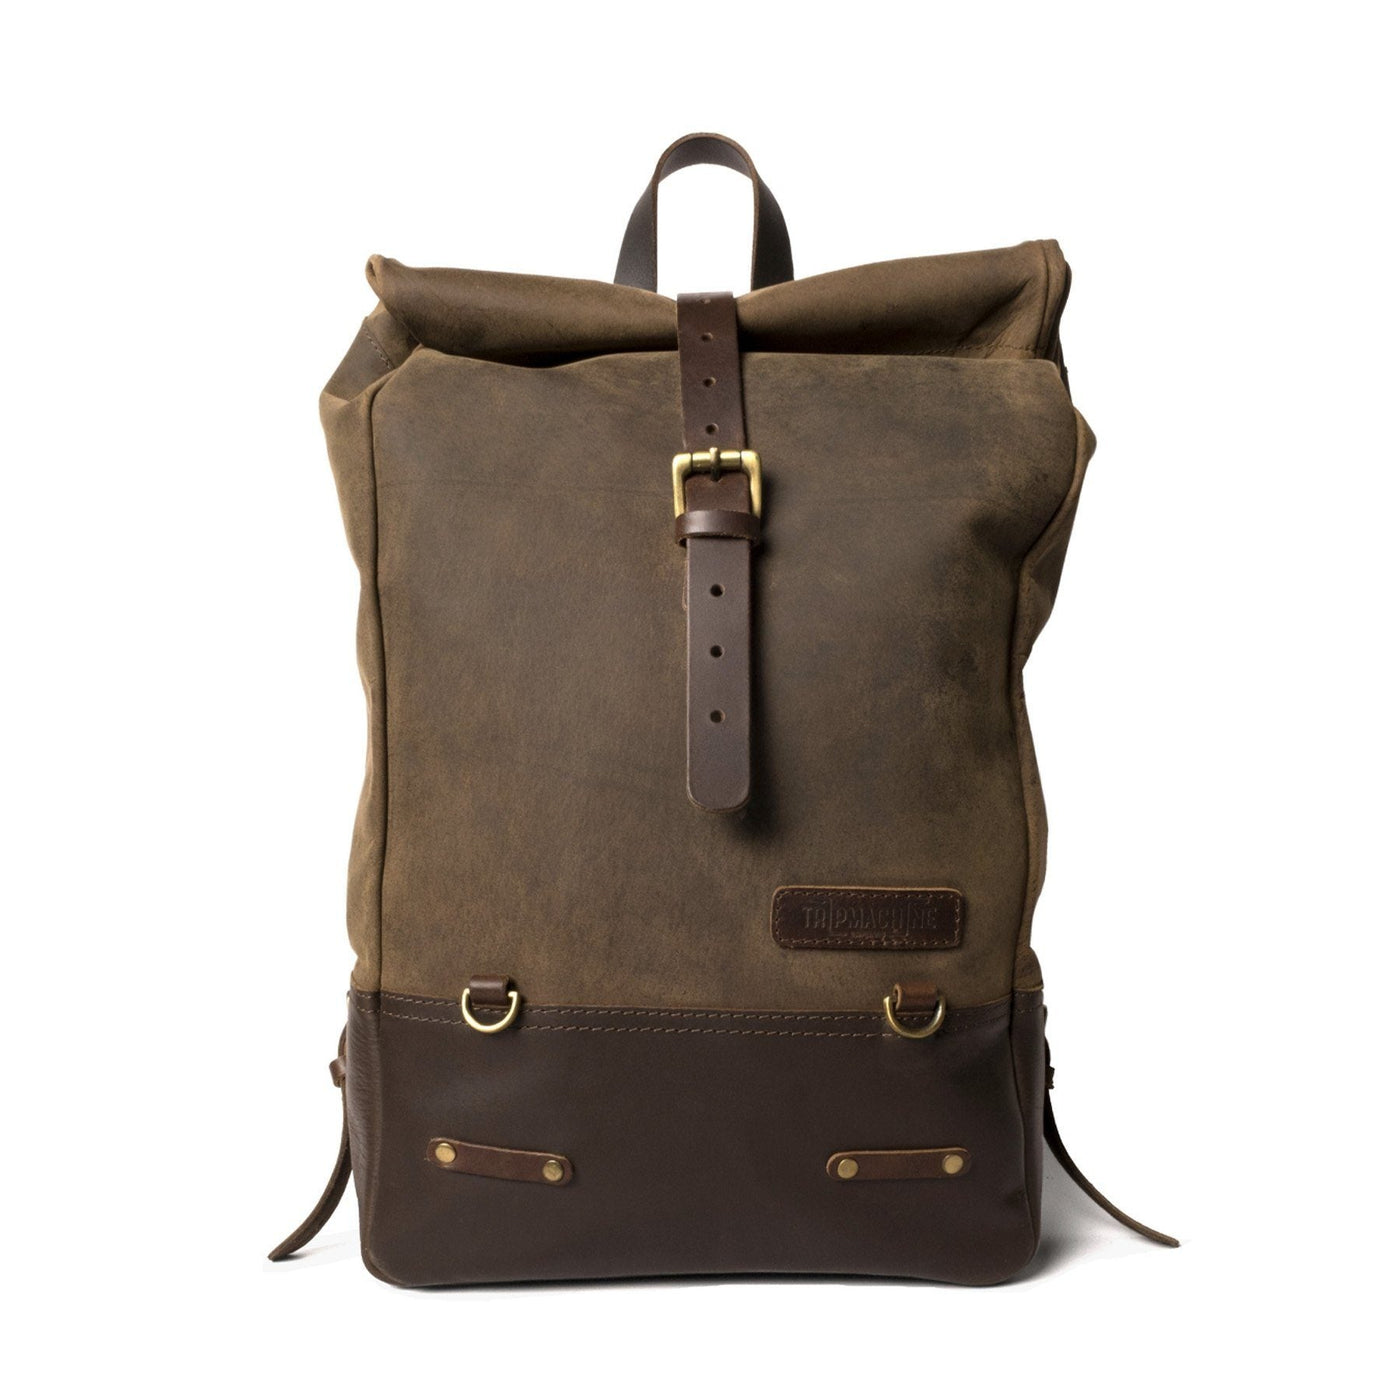 Trip Machine Backpack Pannier Brown